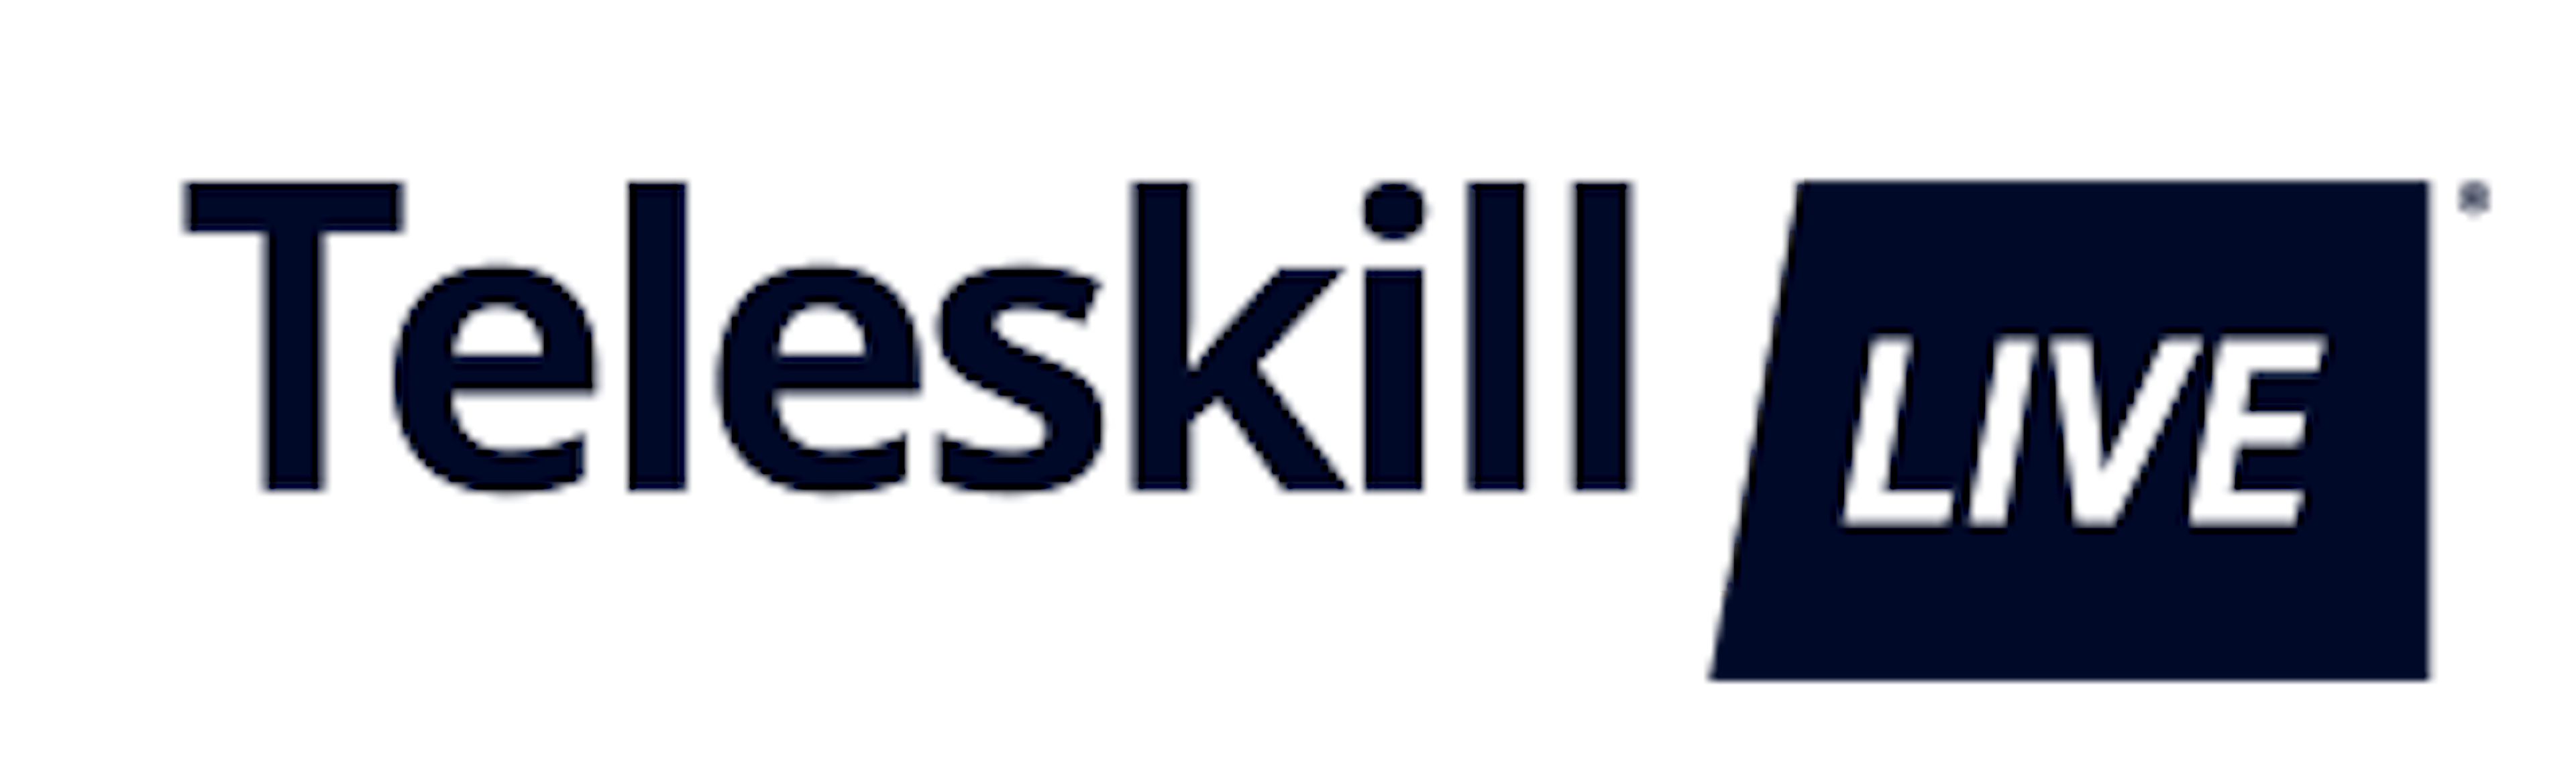 Teleskill Live Logo